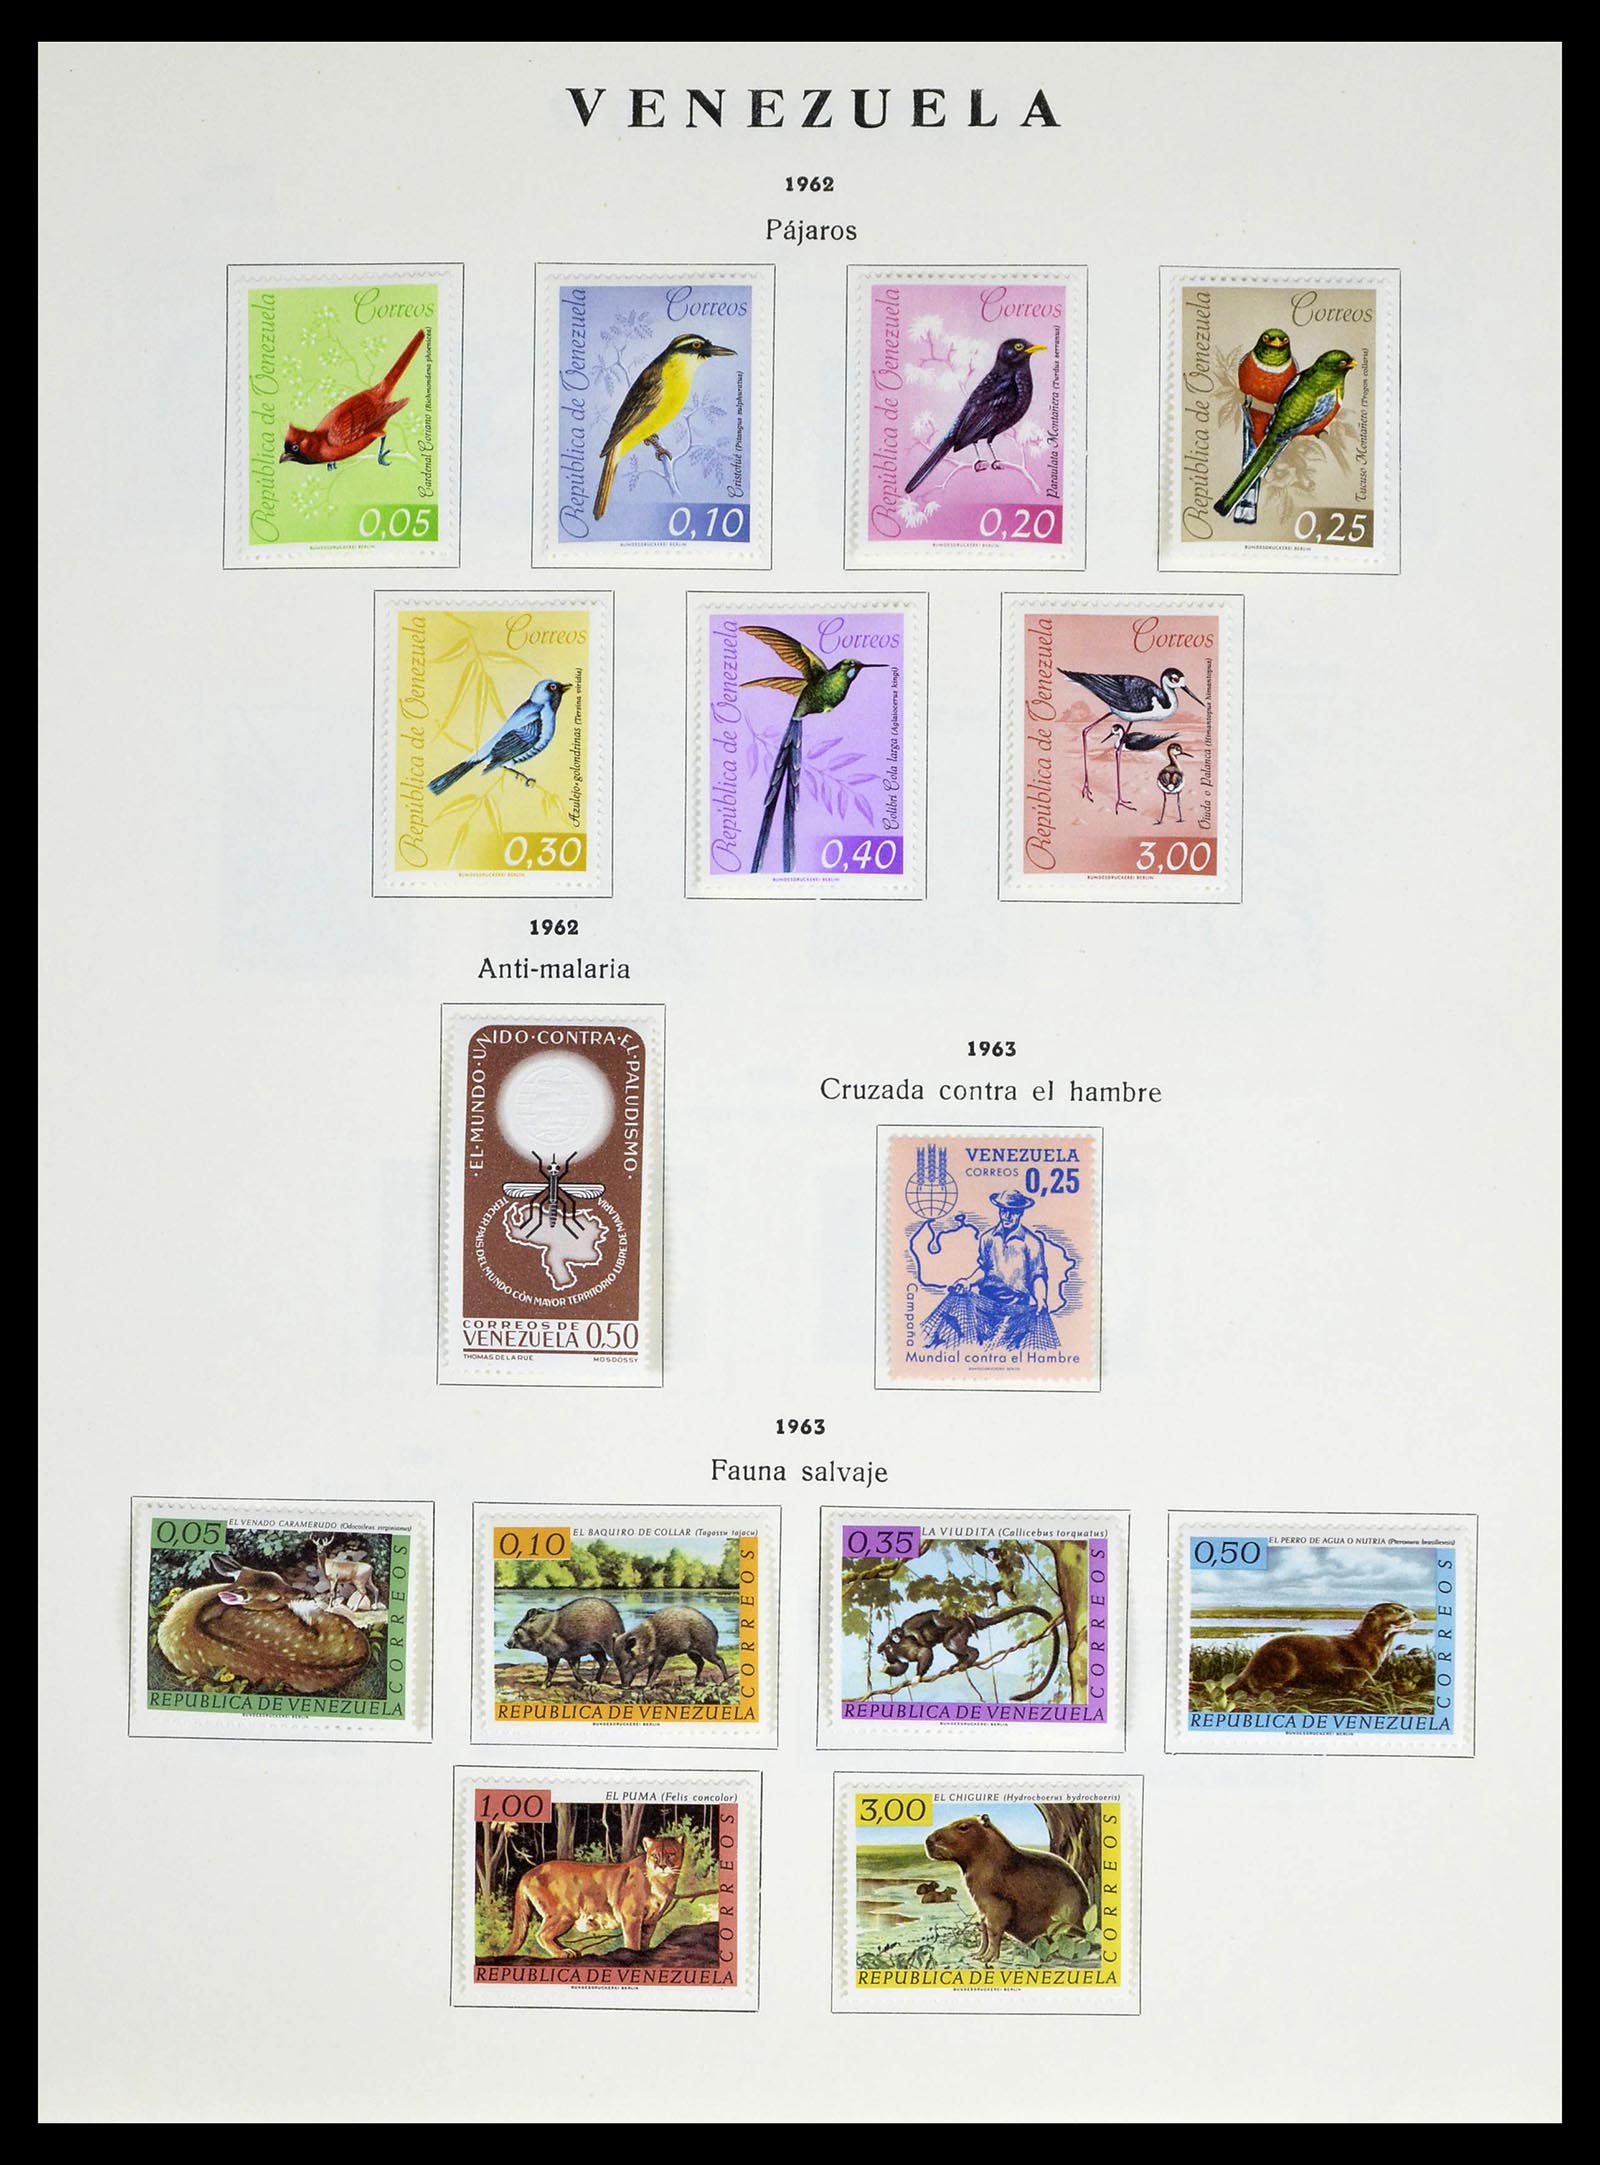 39223 0047 - Stamp collection 39223 Venezuela 1859-1984.